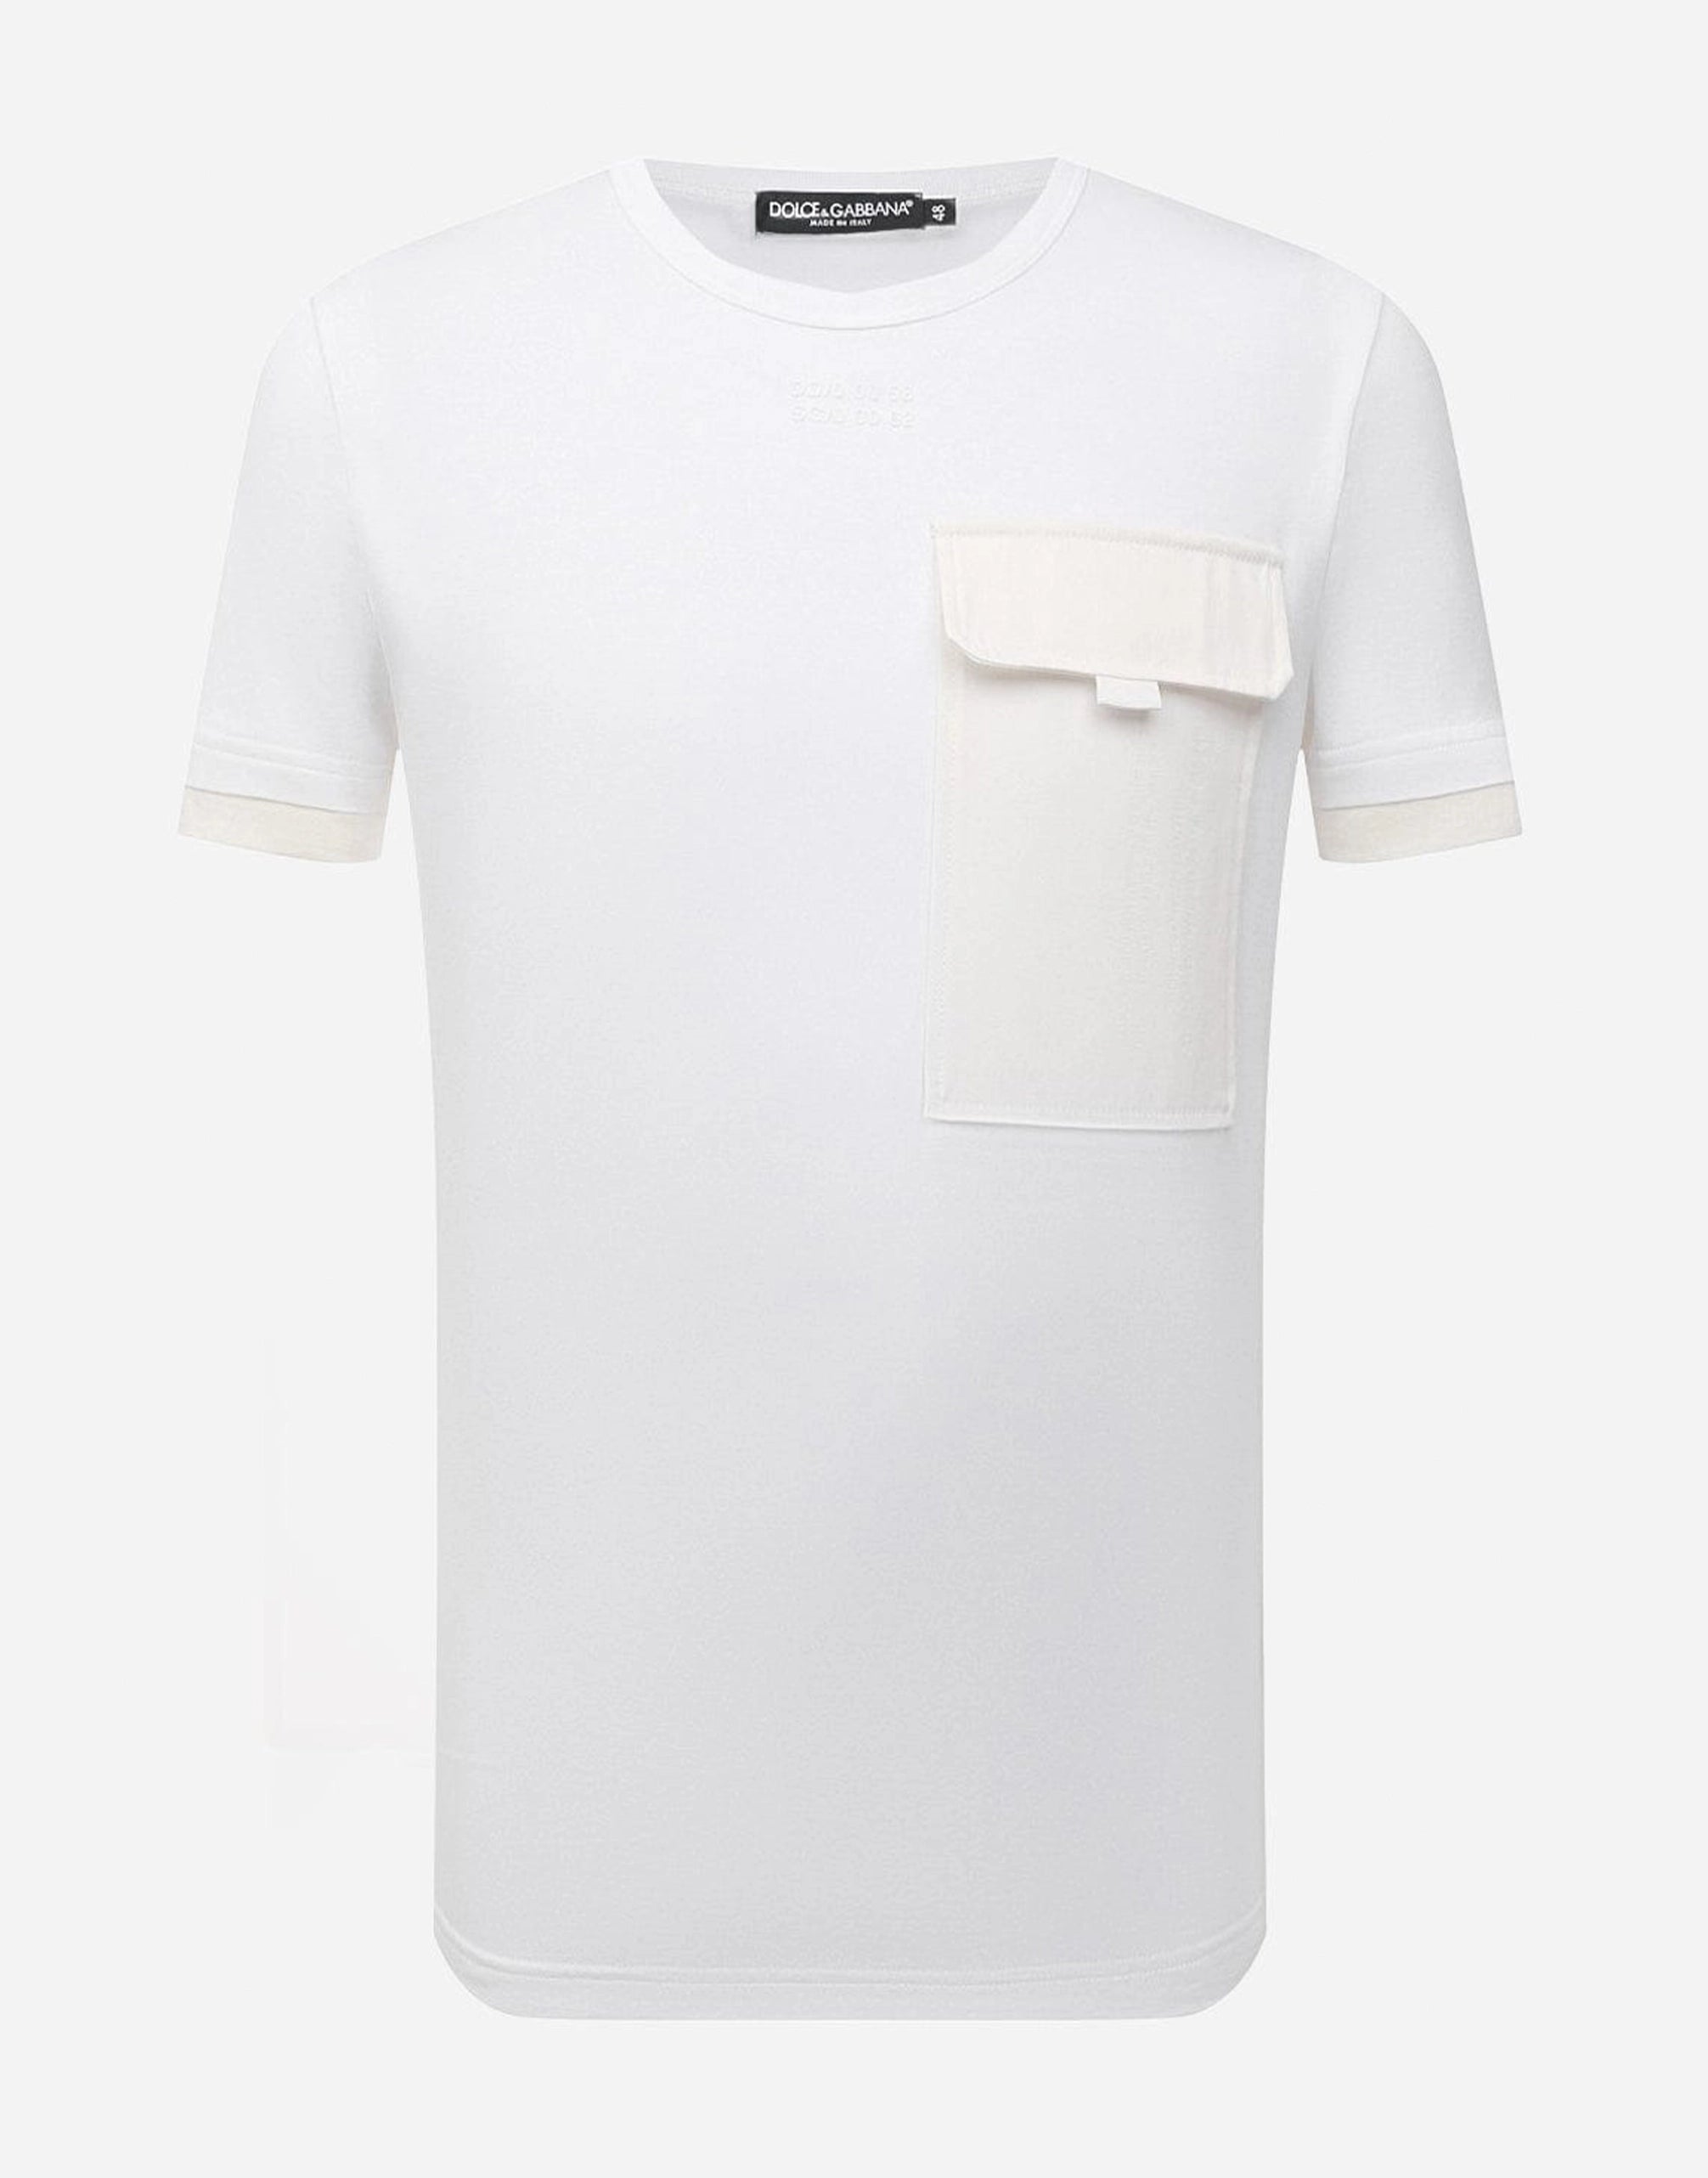 Dolce & Gabbana Flap Pocket T-shirt